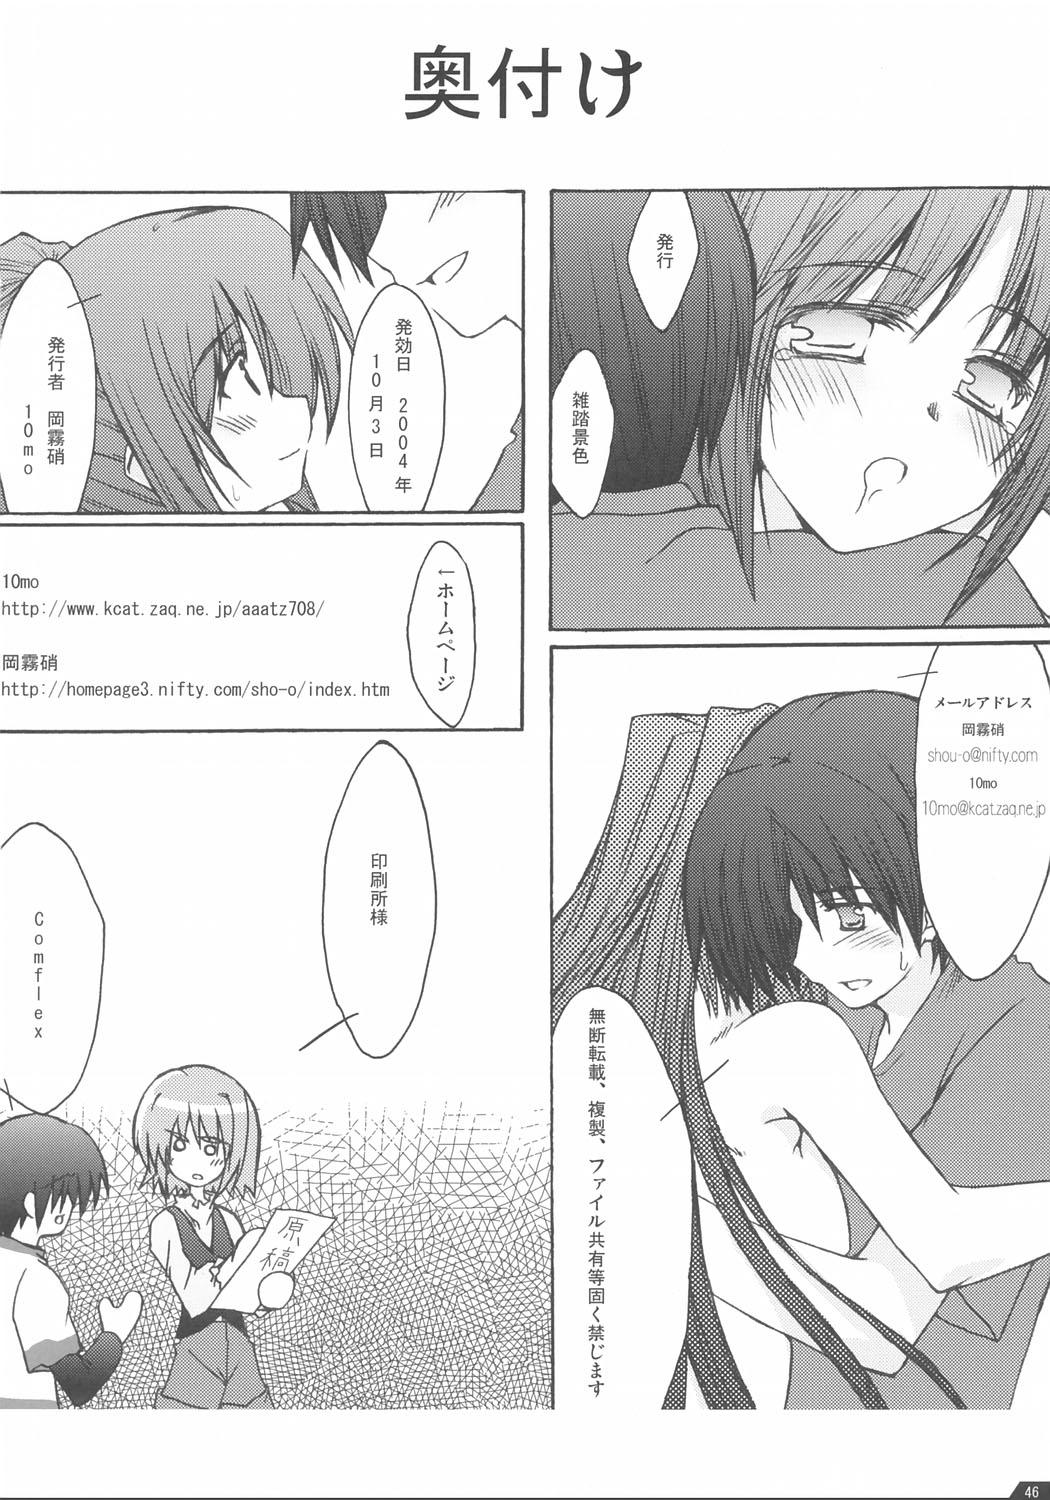 Parody Zattou Keshiki 13 - Toheart2 Teenage Sex - Page 45